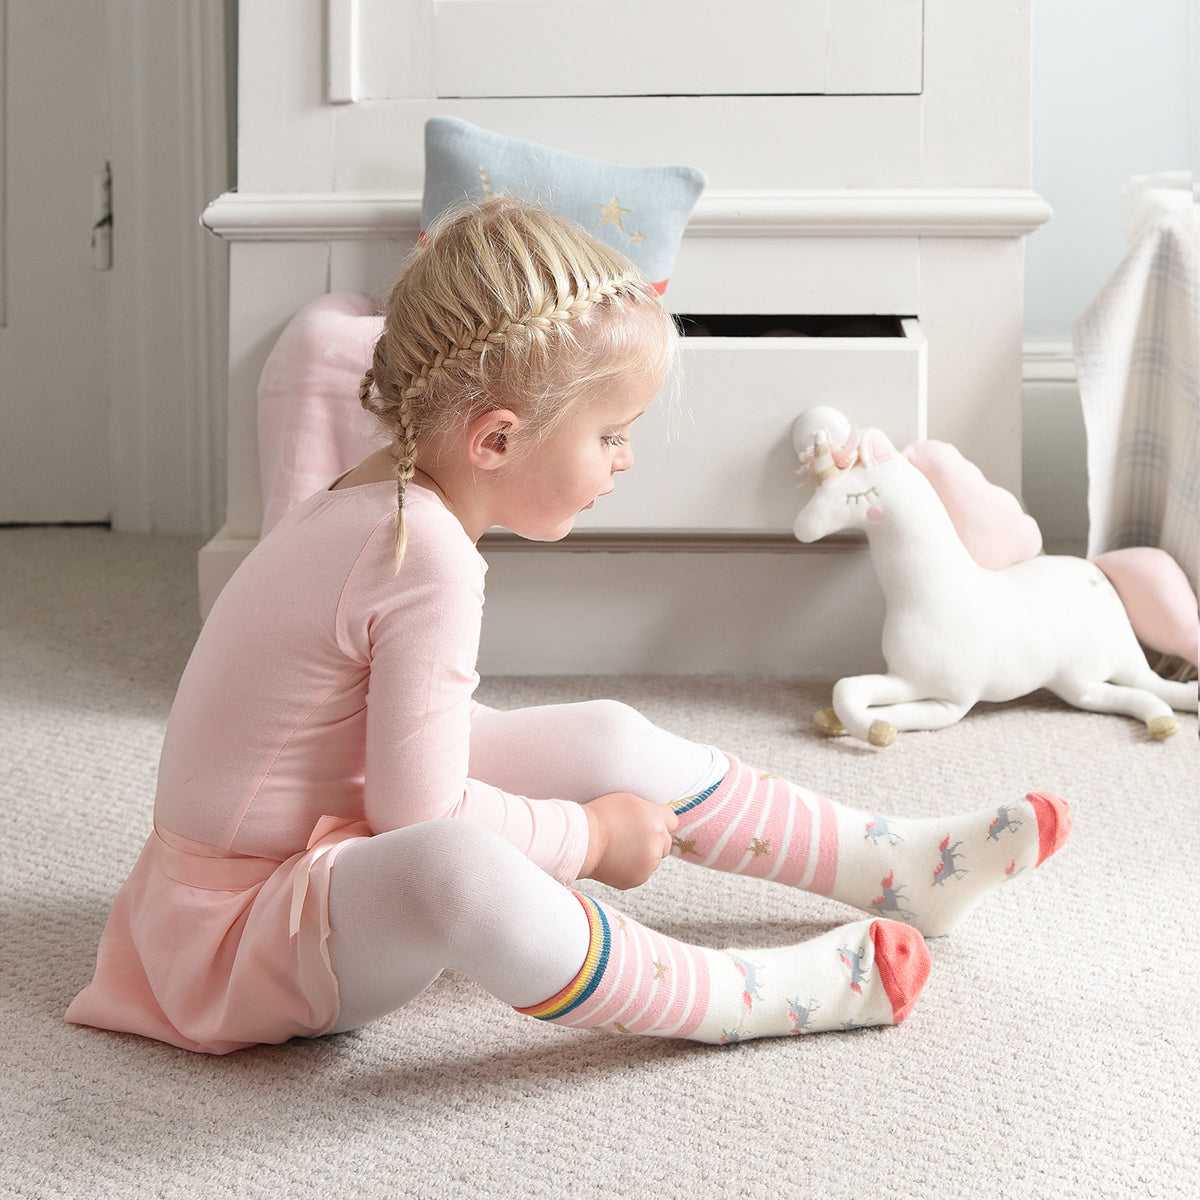 Unicorn Kids Socks by Sophie Allport